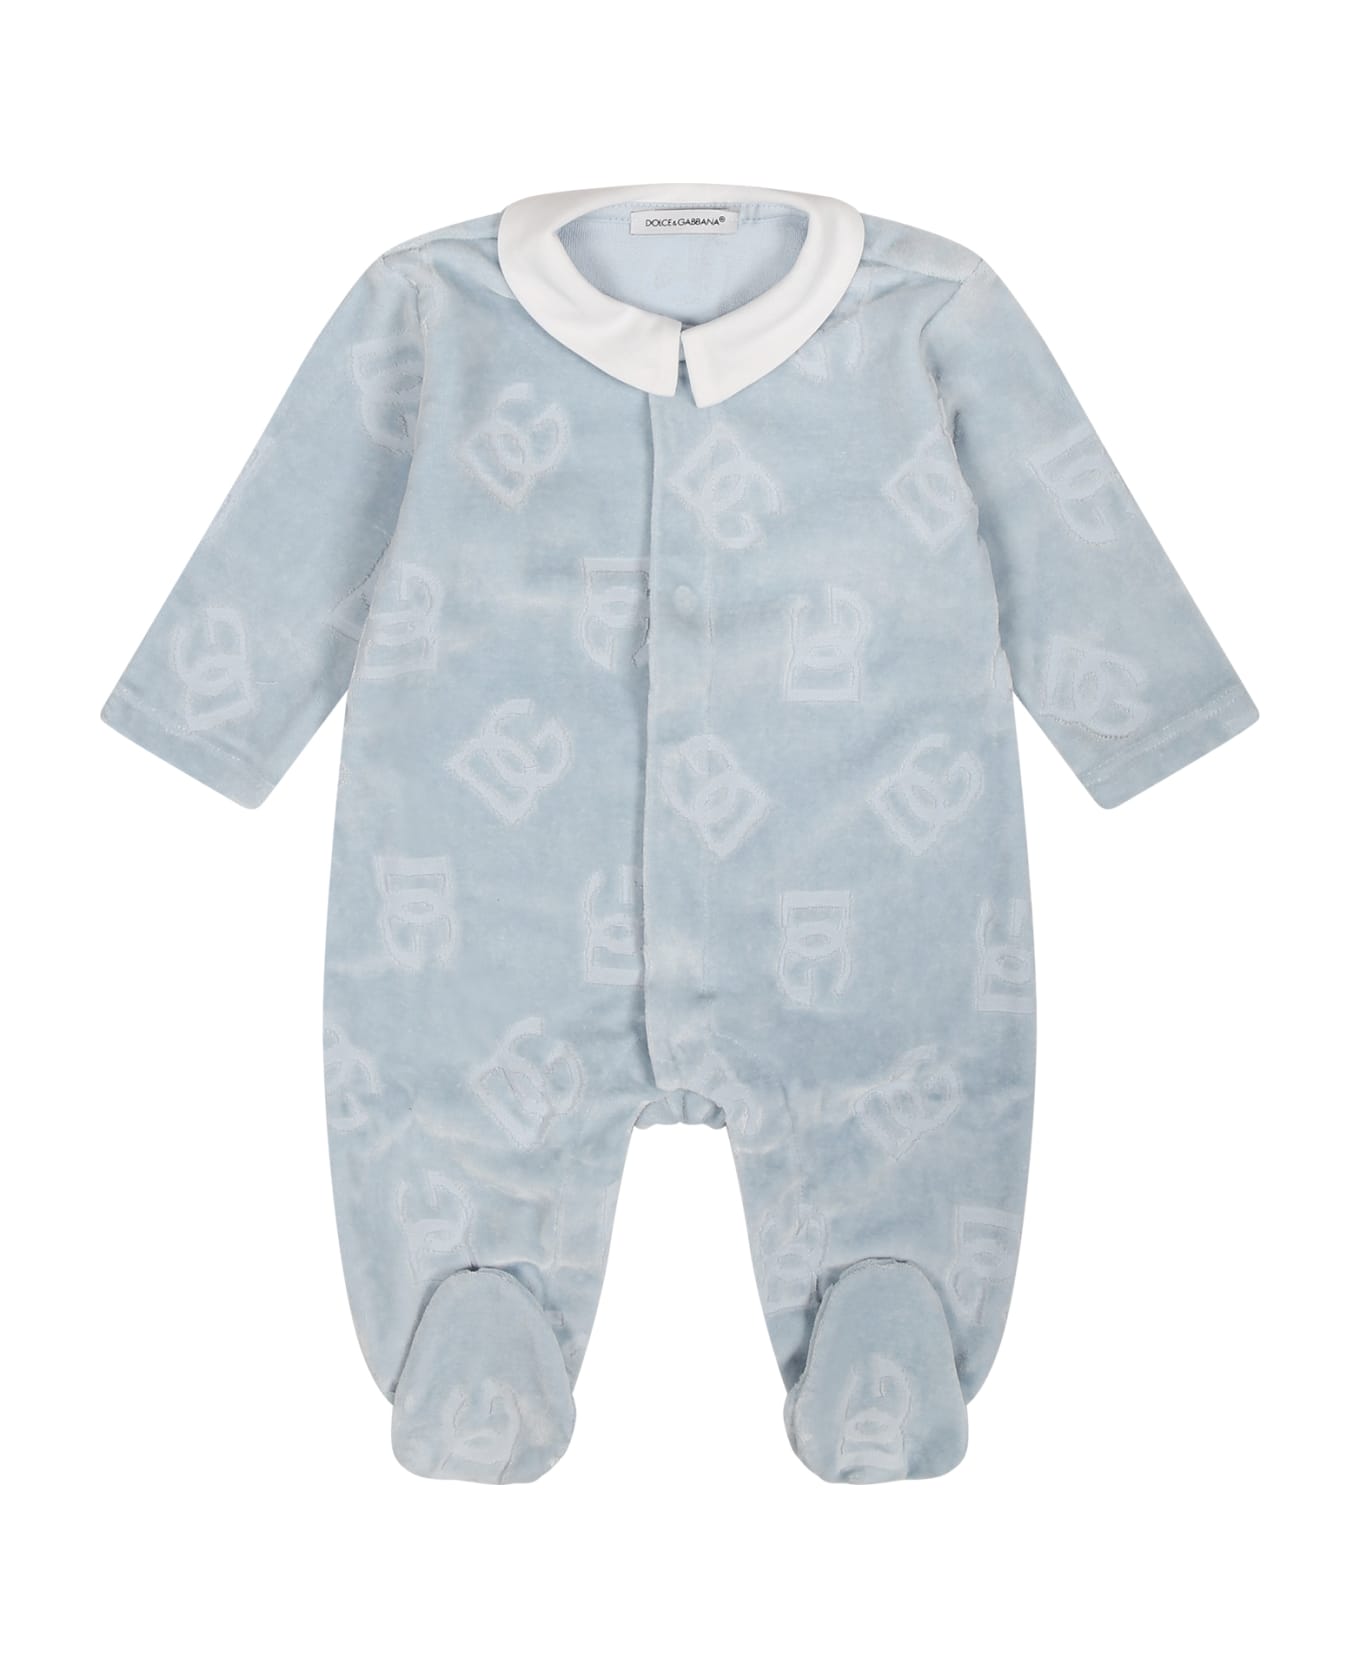 Dolce & Gabbana Light Blue Babygrow For Baby Boy With Logo - Light Blue